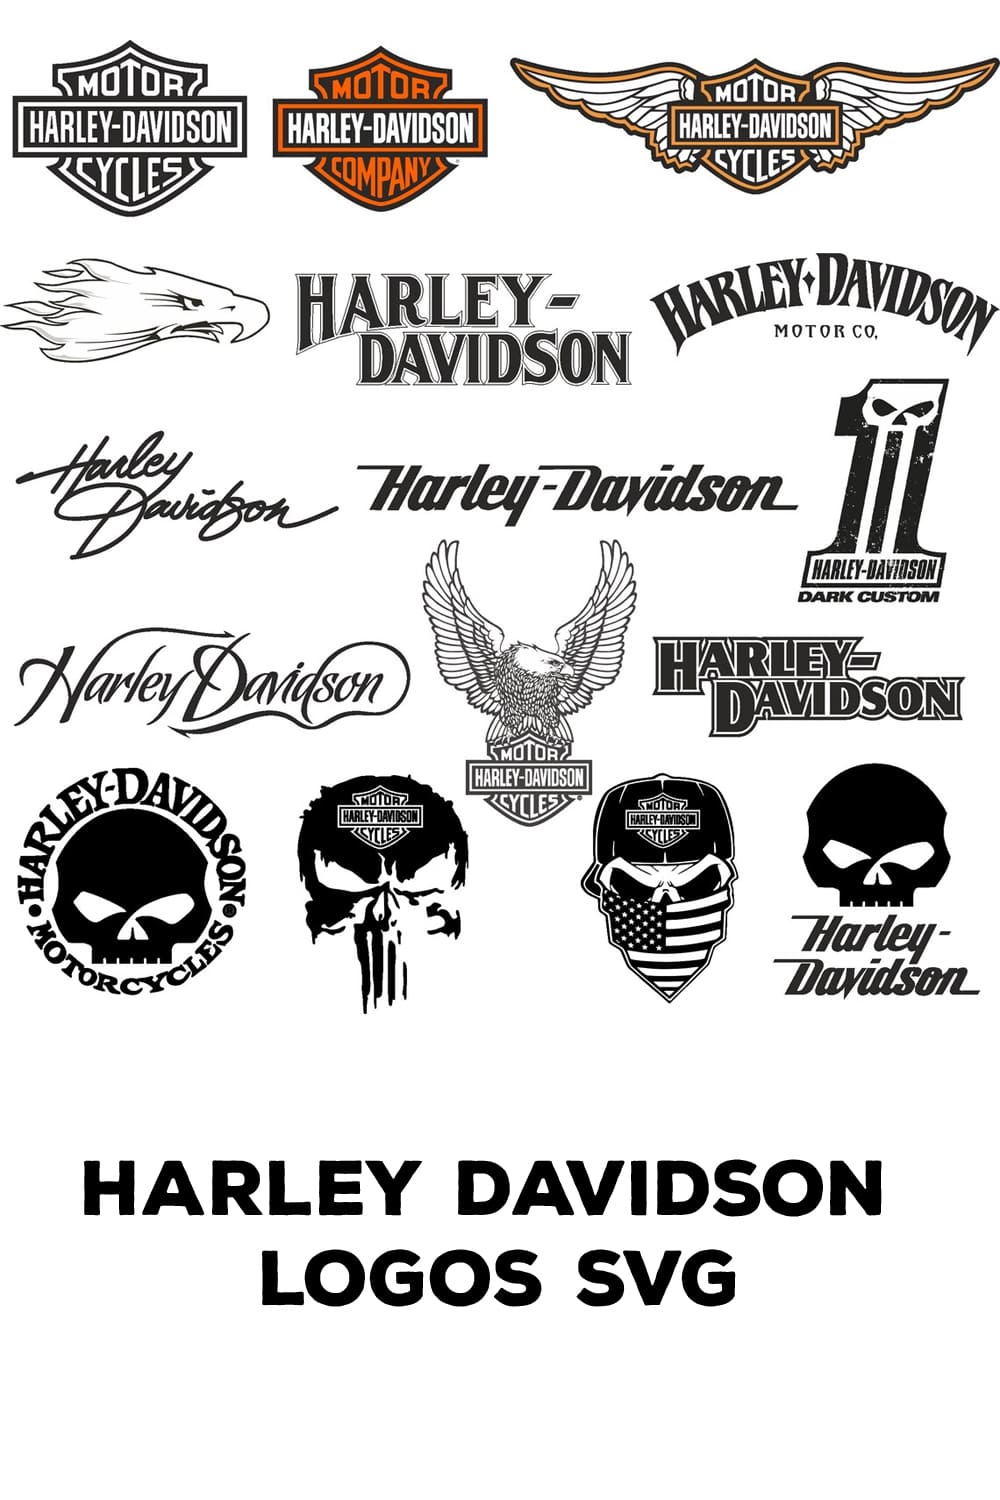 Harley davidson logos svg - pinterest image preview.